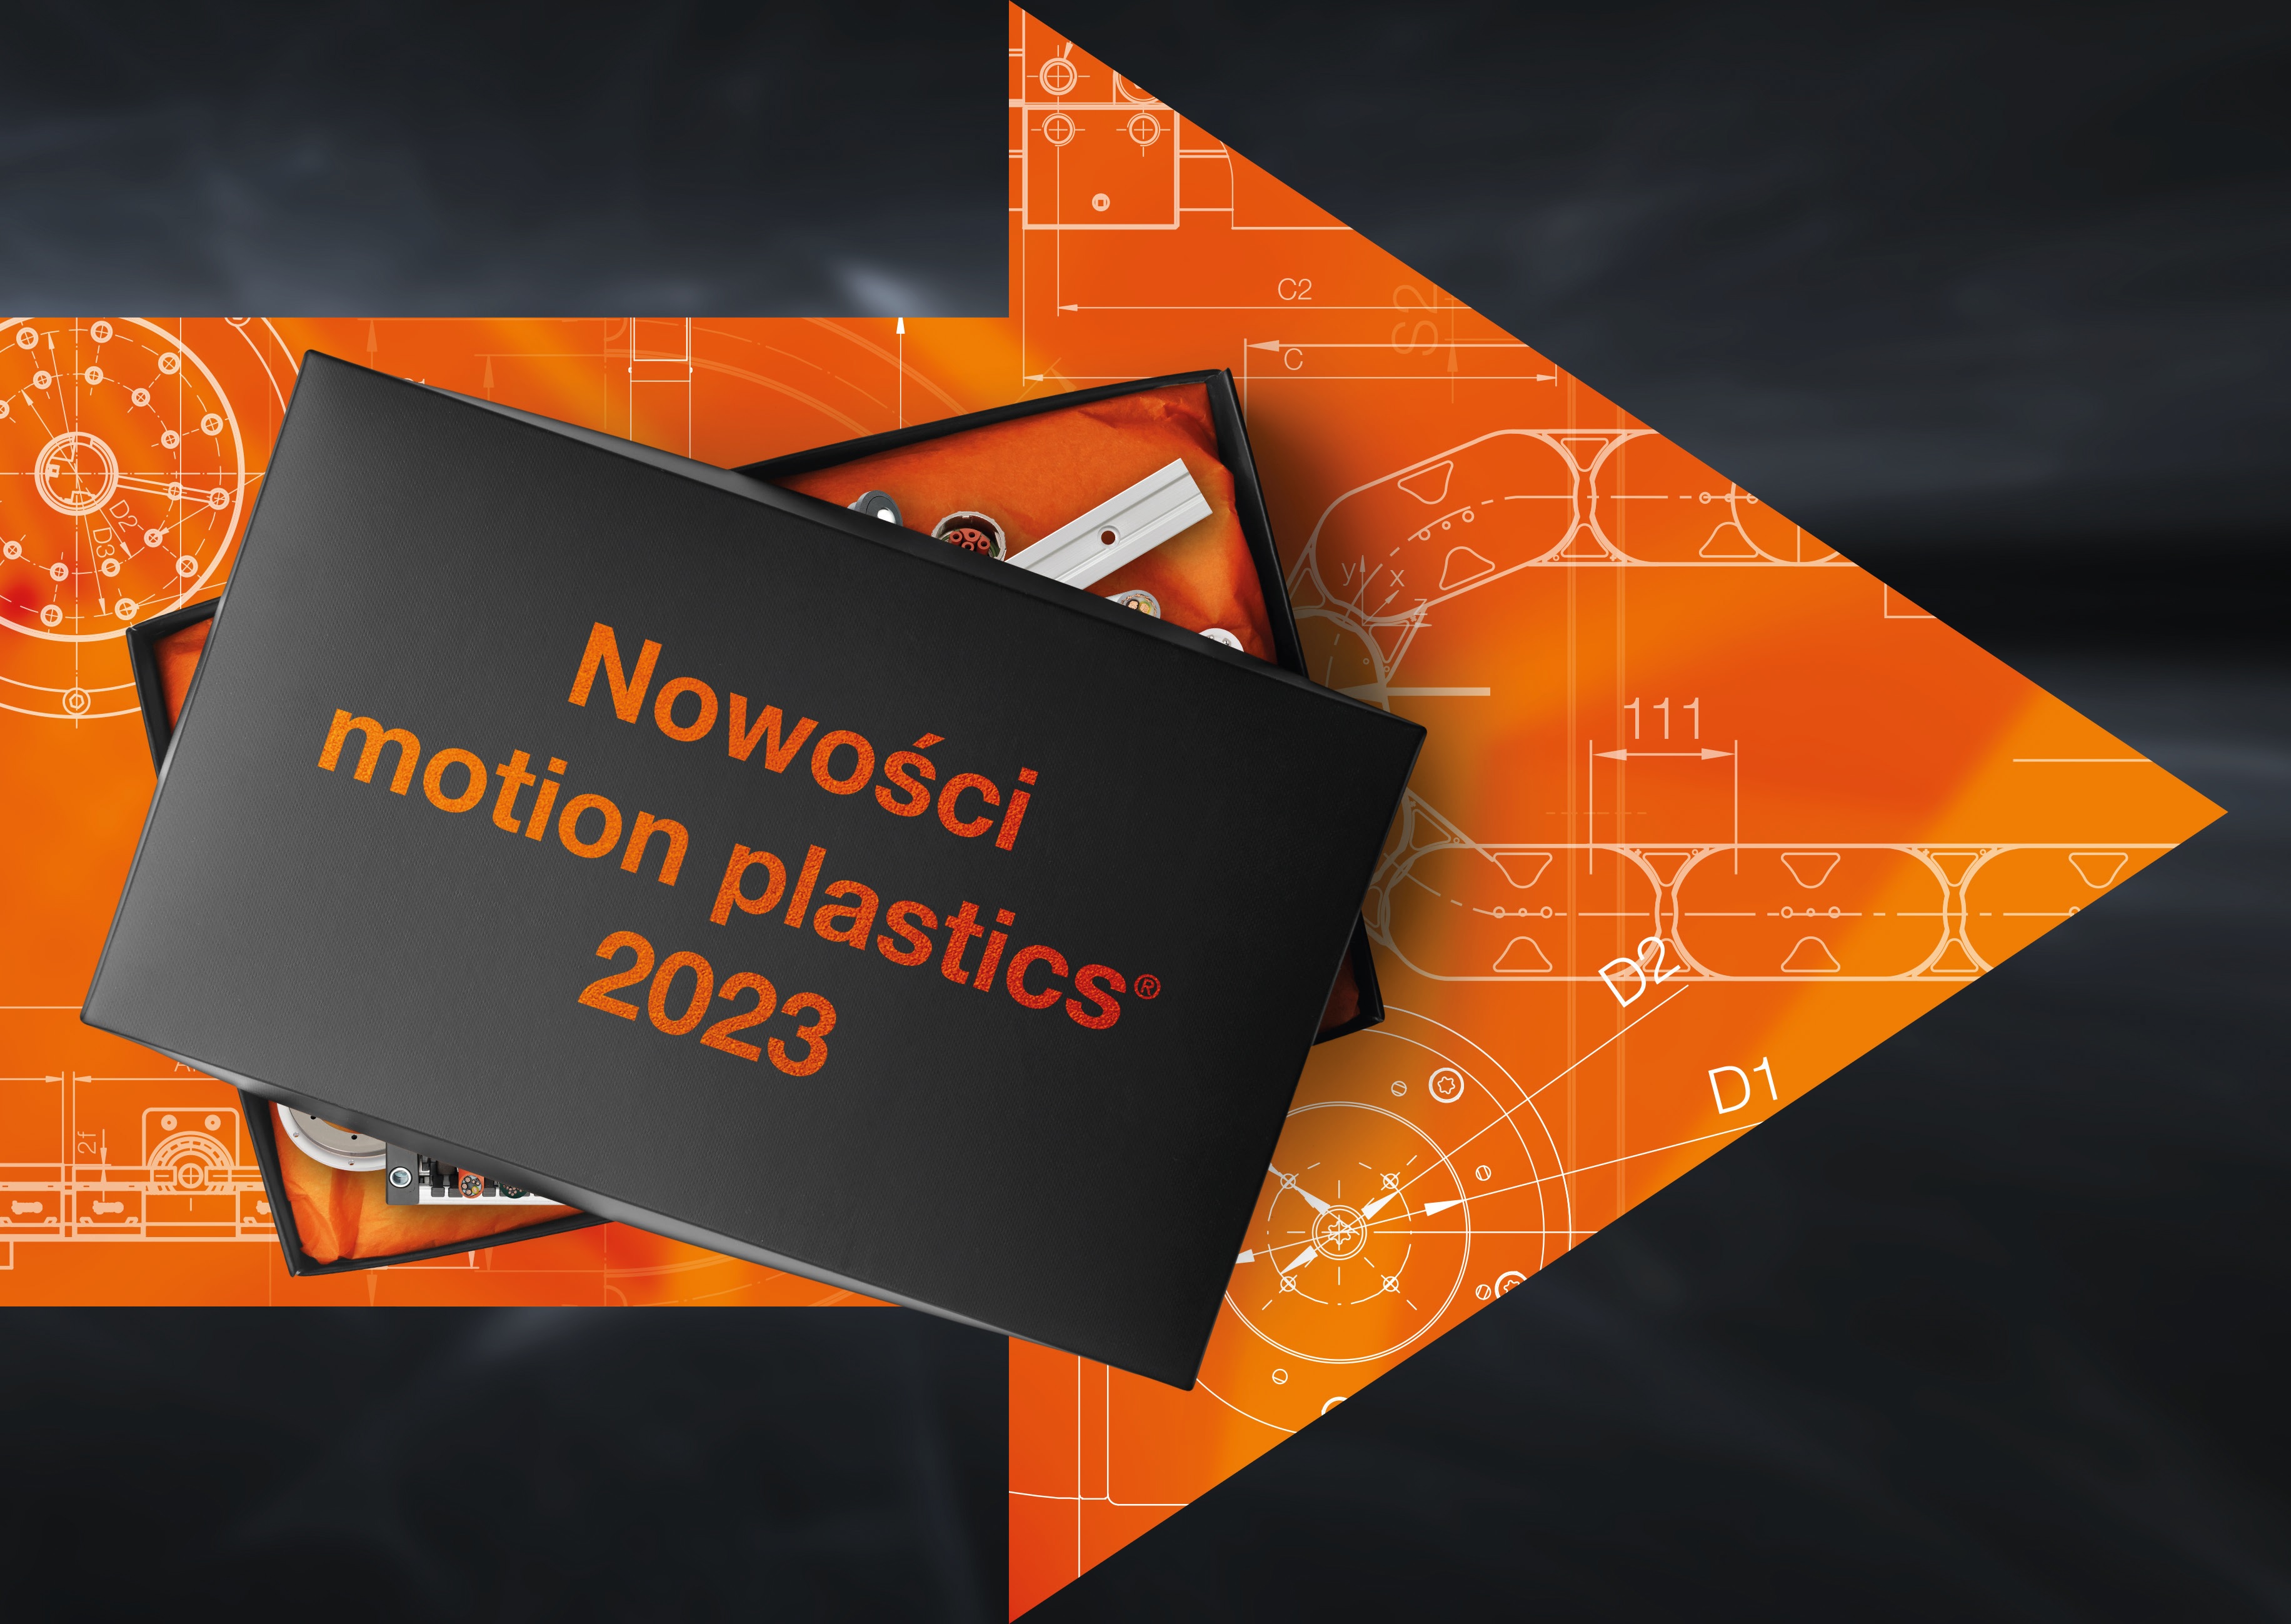 5. new motion plastics 2023 - PL